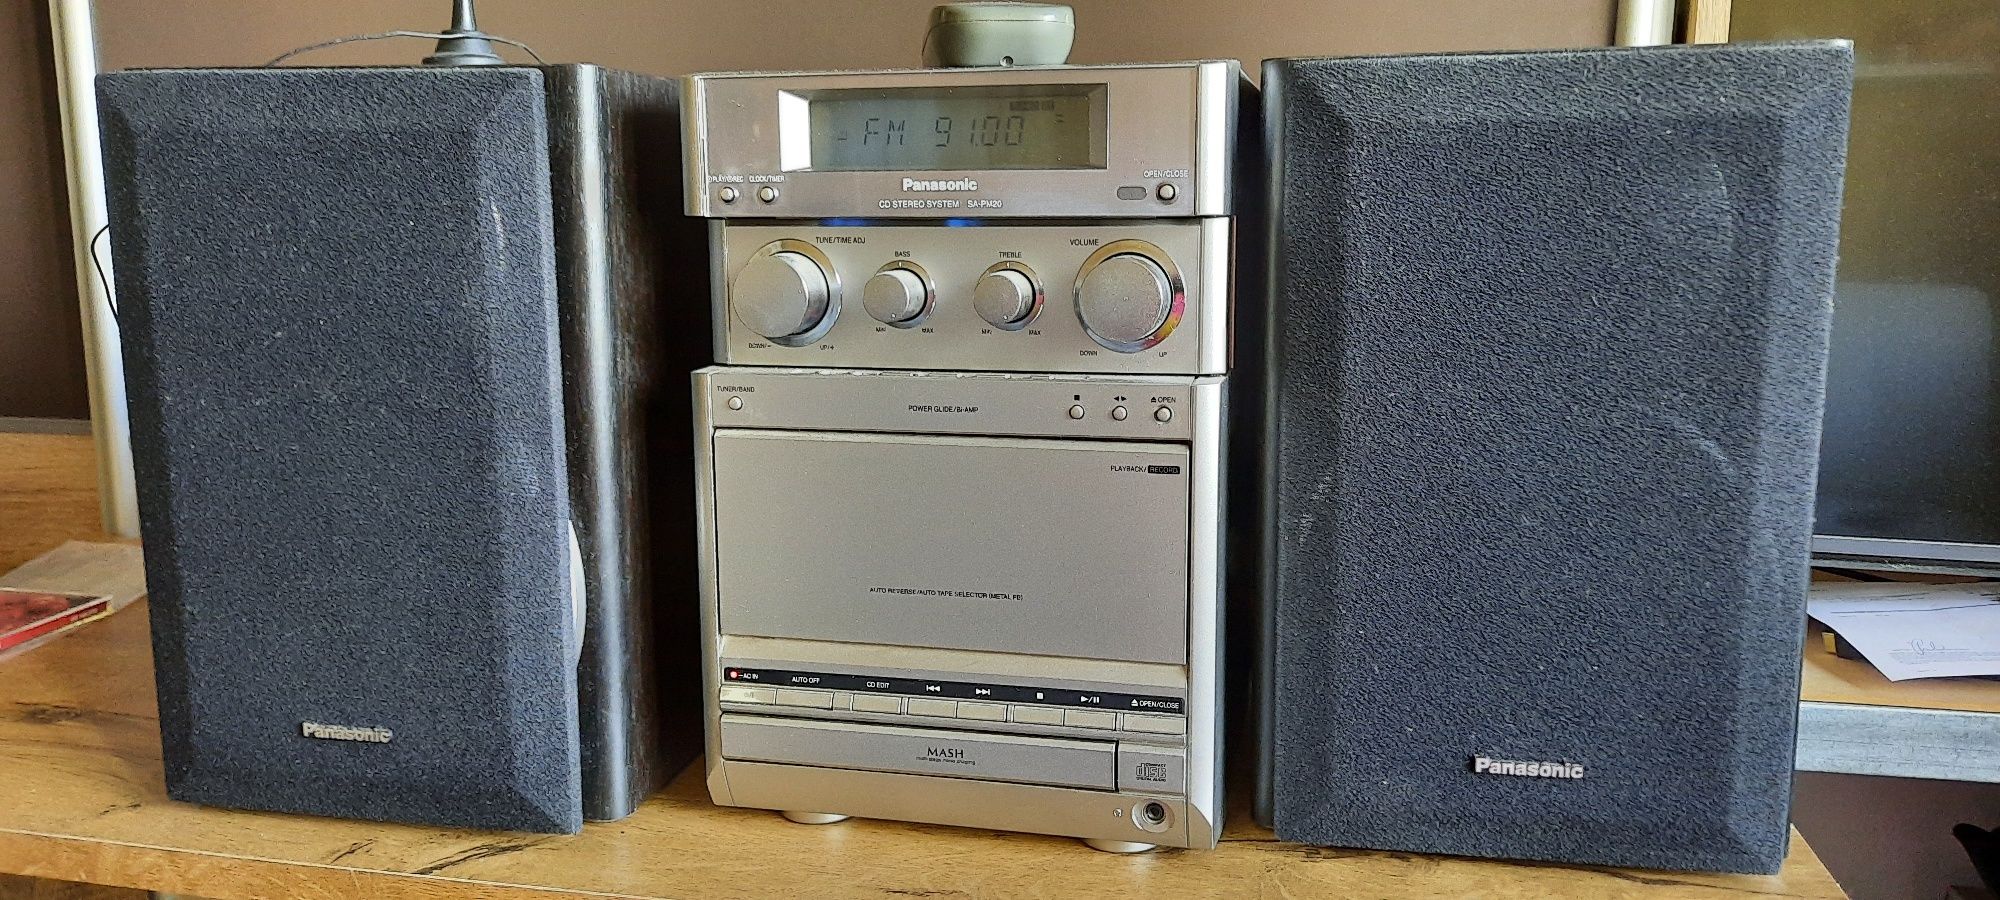 Panasonic SA-PM 20 mini wieża, radio, płyty CD, kaseta, pilot, kolumny